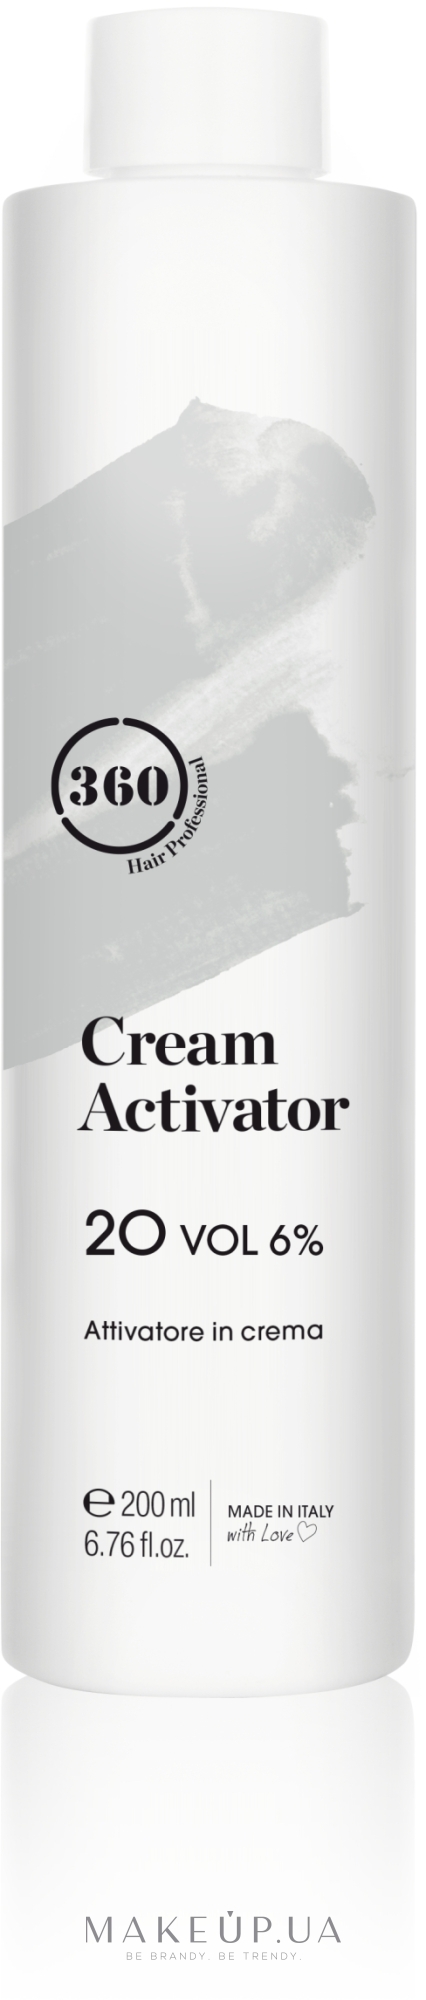 Активатор 360. Окисляющая эмульсия Cream Activator 20 Vol 6% 200 мл. Cream Activator 20 360. Активатор an-Activator 200мл. 360 Hair professional.